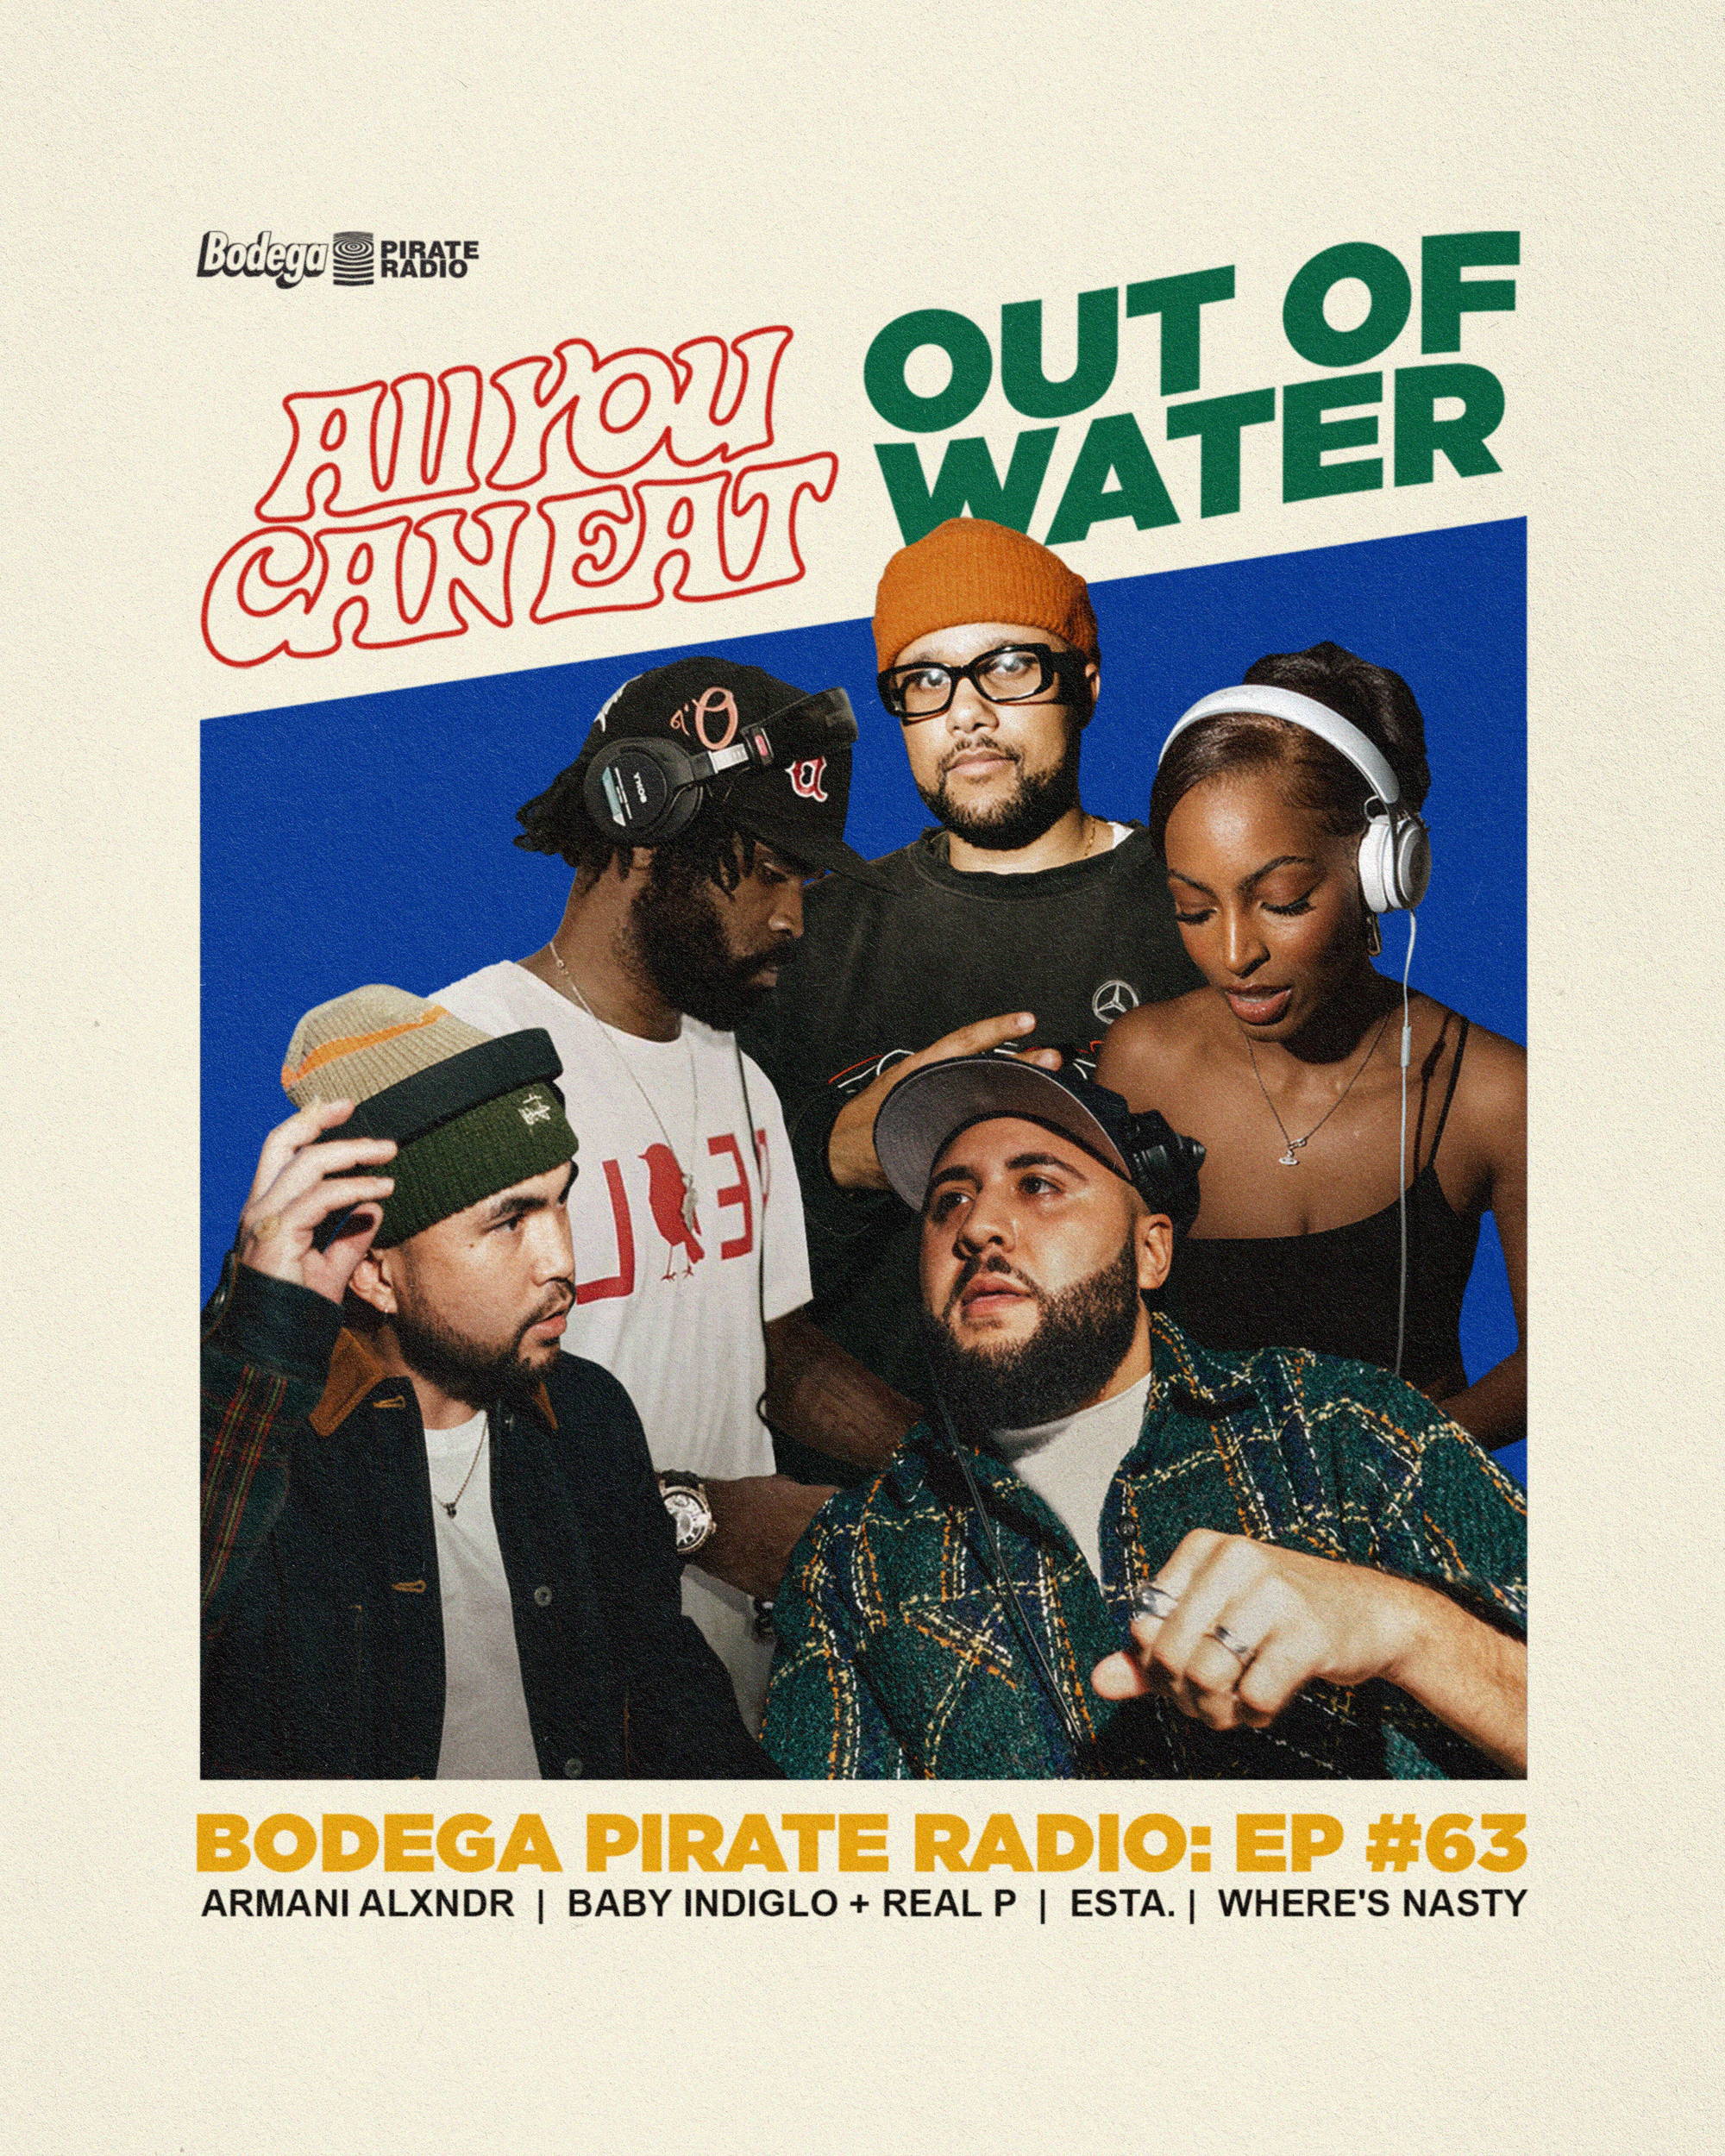 Bodega Pirate Radio: EP #63 - ALLYOUCANEAT